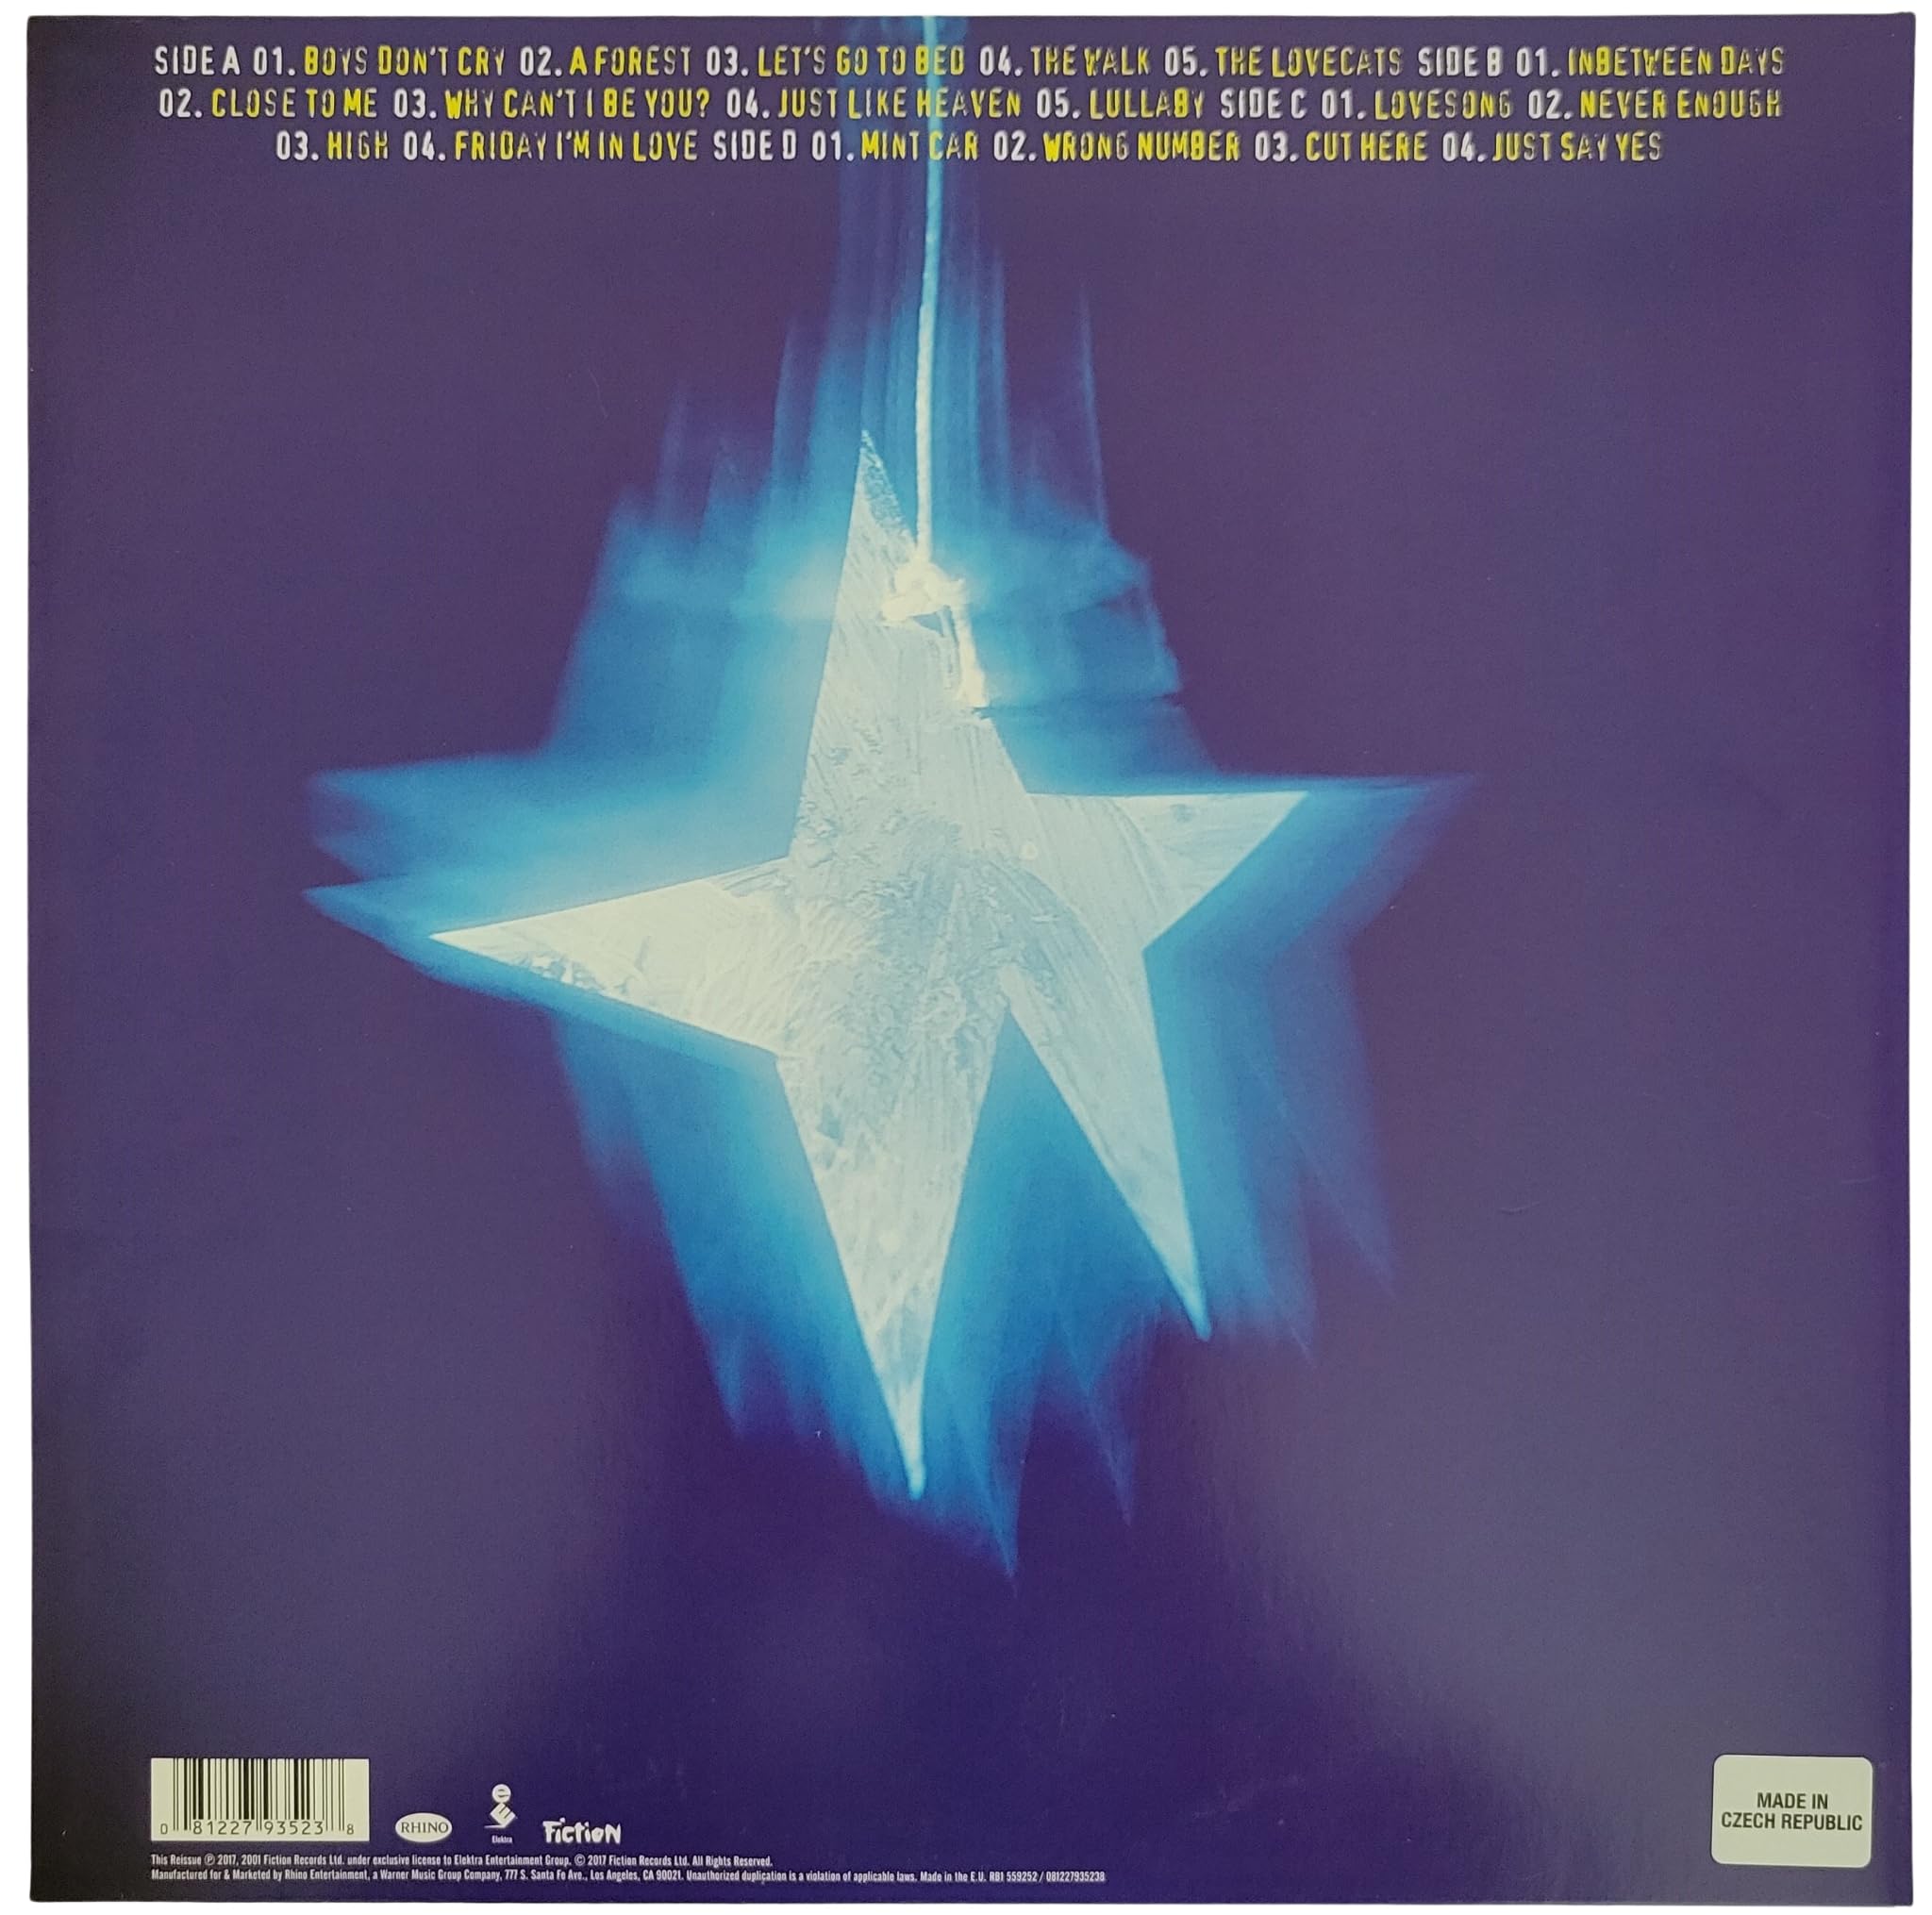 Robert Smith signed The Cure Faith album, Vinyl Record COA exact proof Star  - Coast to Coast Collectibles Memorabilia - #sports_memorabilia# -  #entertainment_memorabilia#